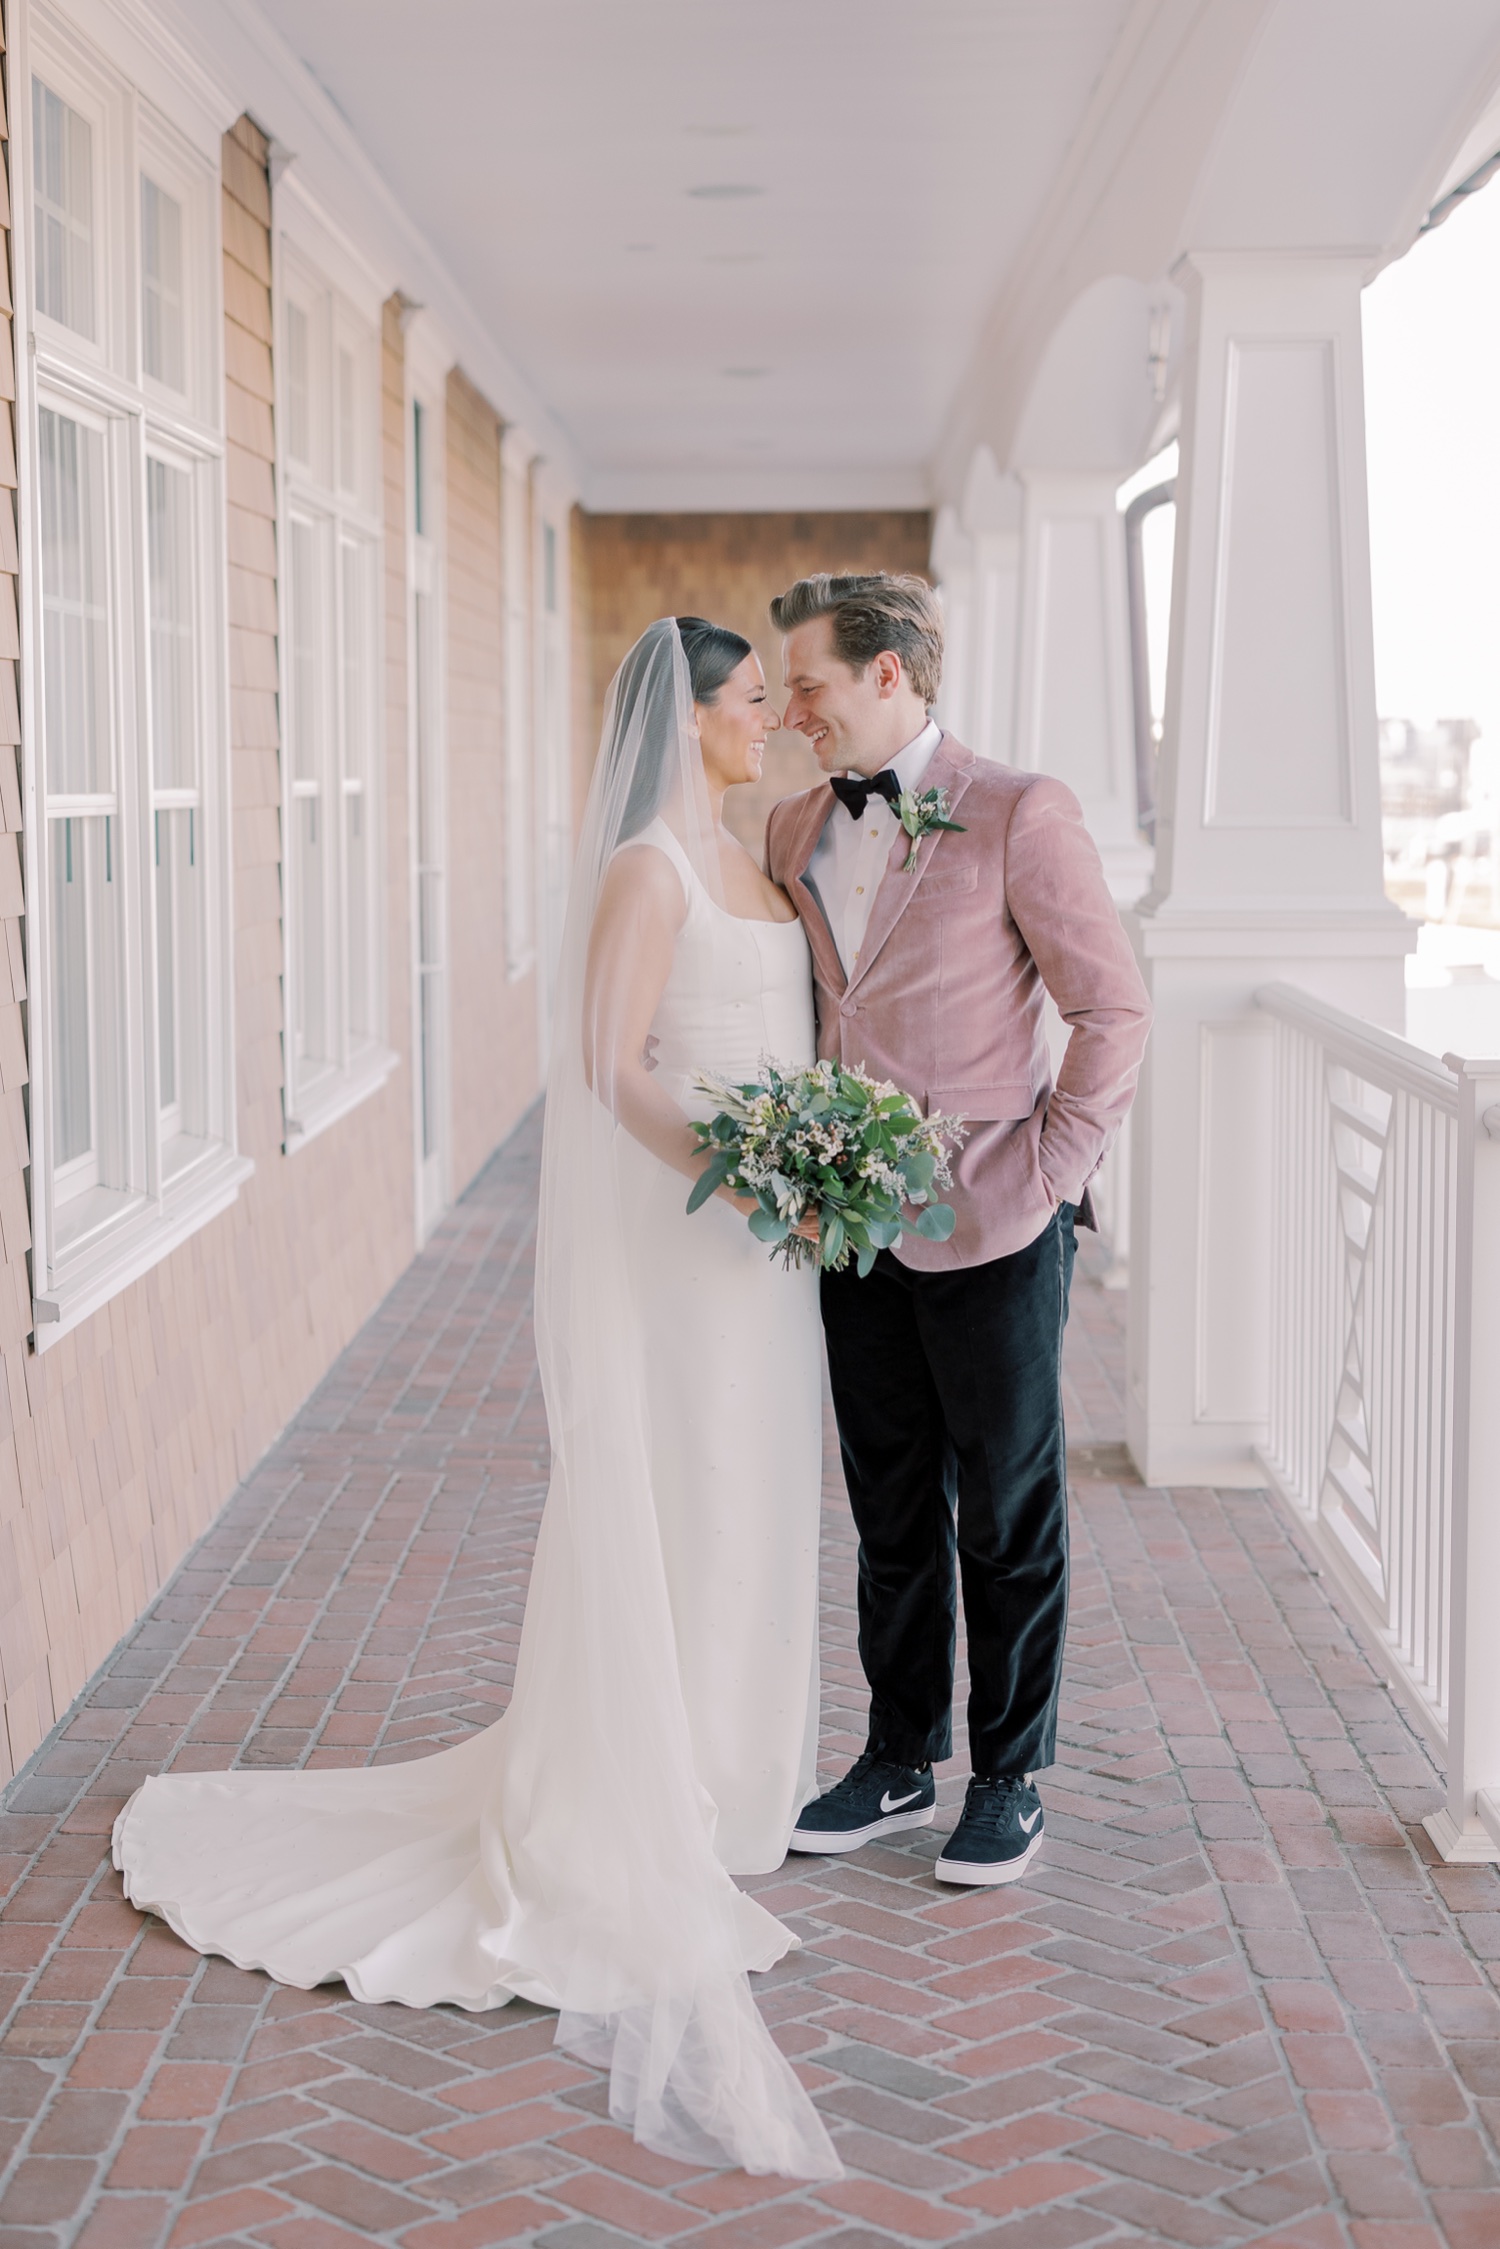 Hotel LBI New Jersey Winter Wedding | New Jersey Wedding Photographer